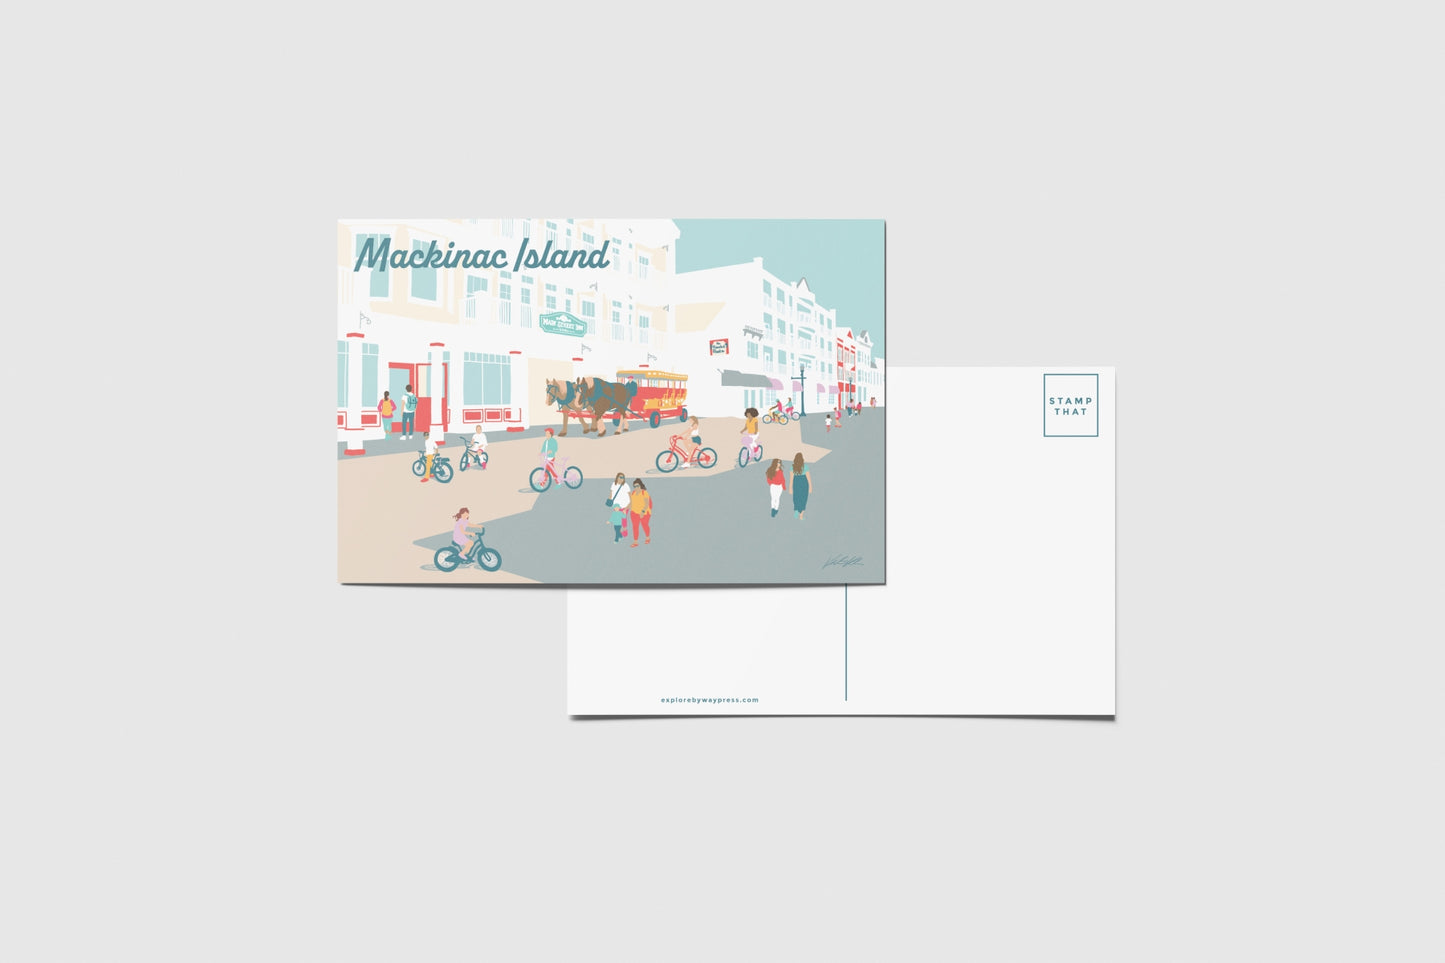 Mackinac Island Main Street Travel Postcard